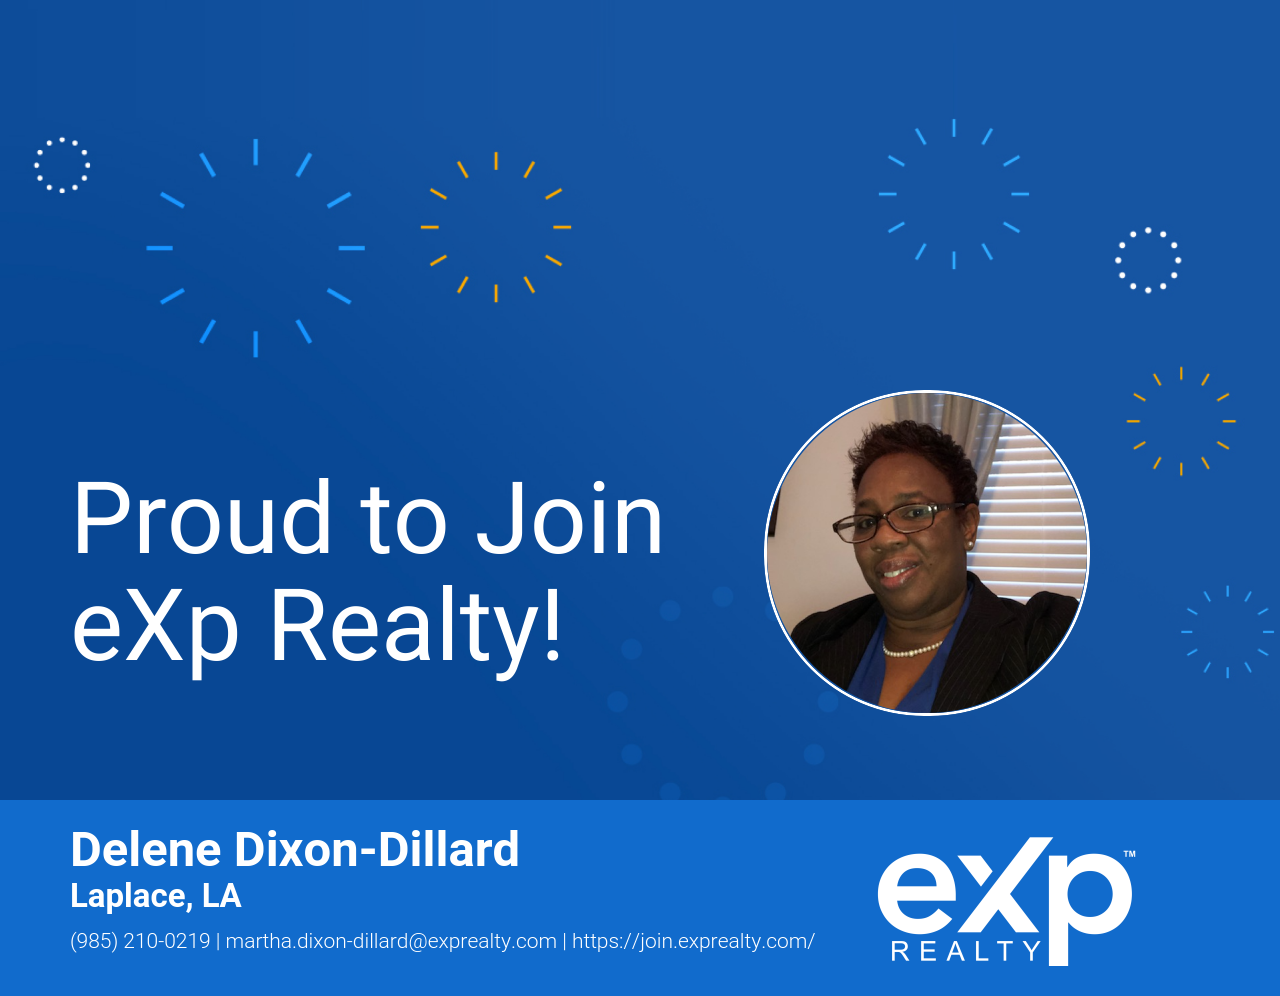 Delene Dixon-Dillard Joined eXp Realty!